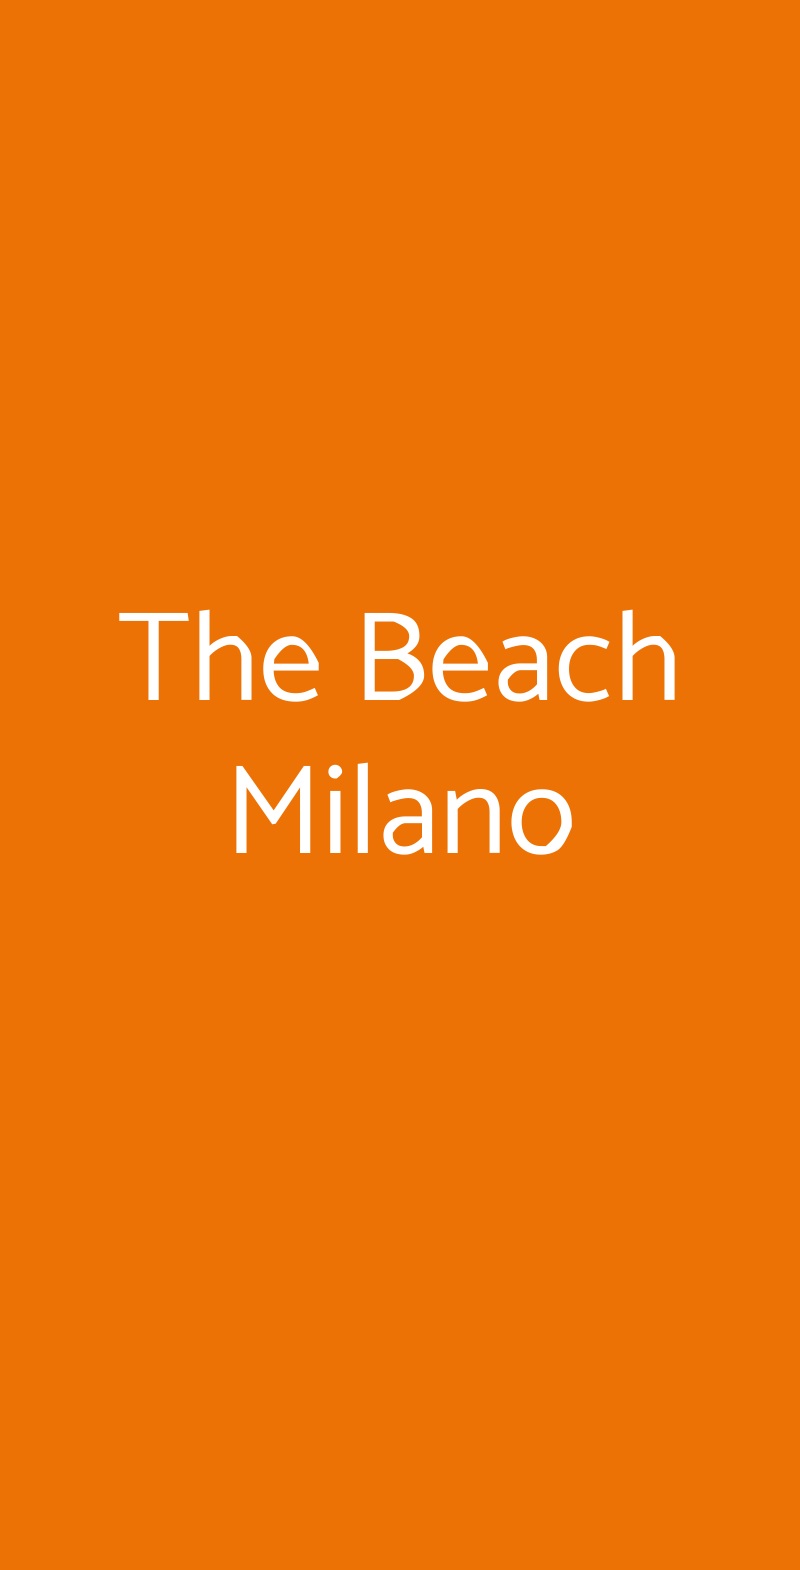 The Beach Milano Milano menù 1 pagina